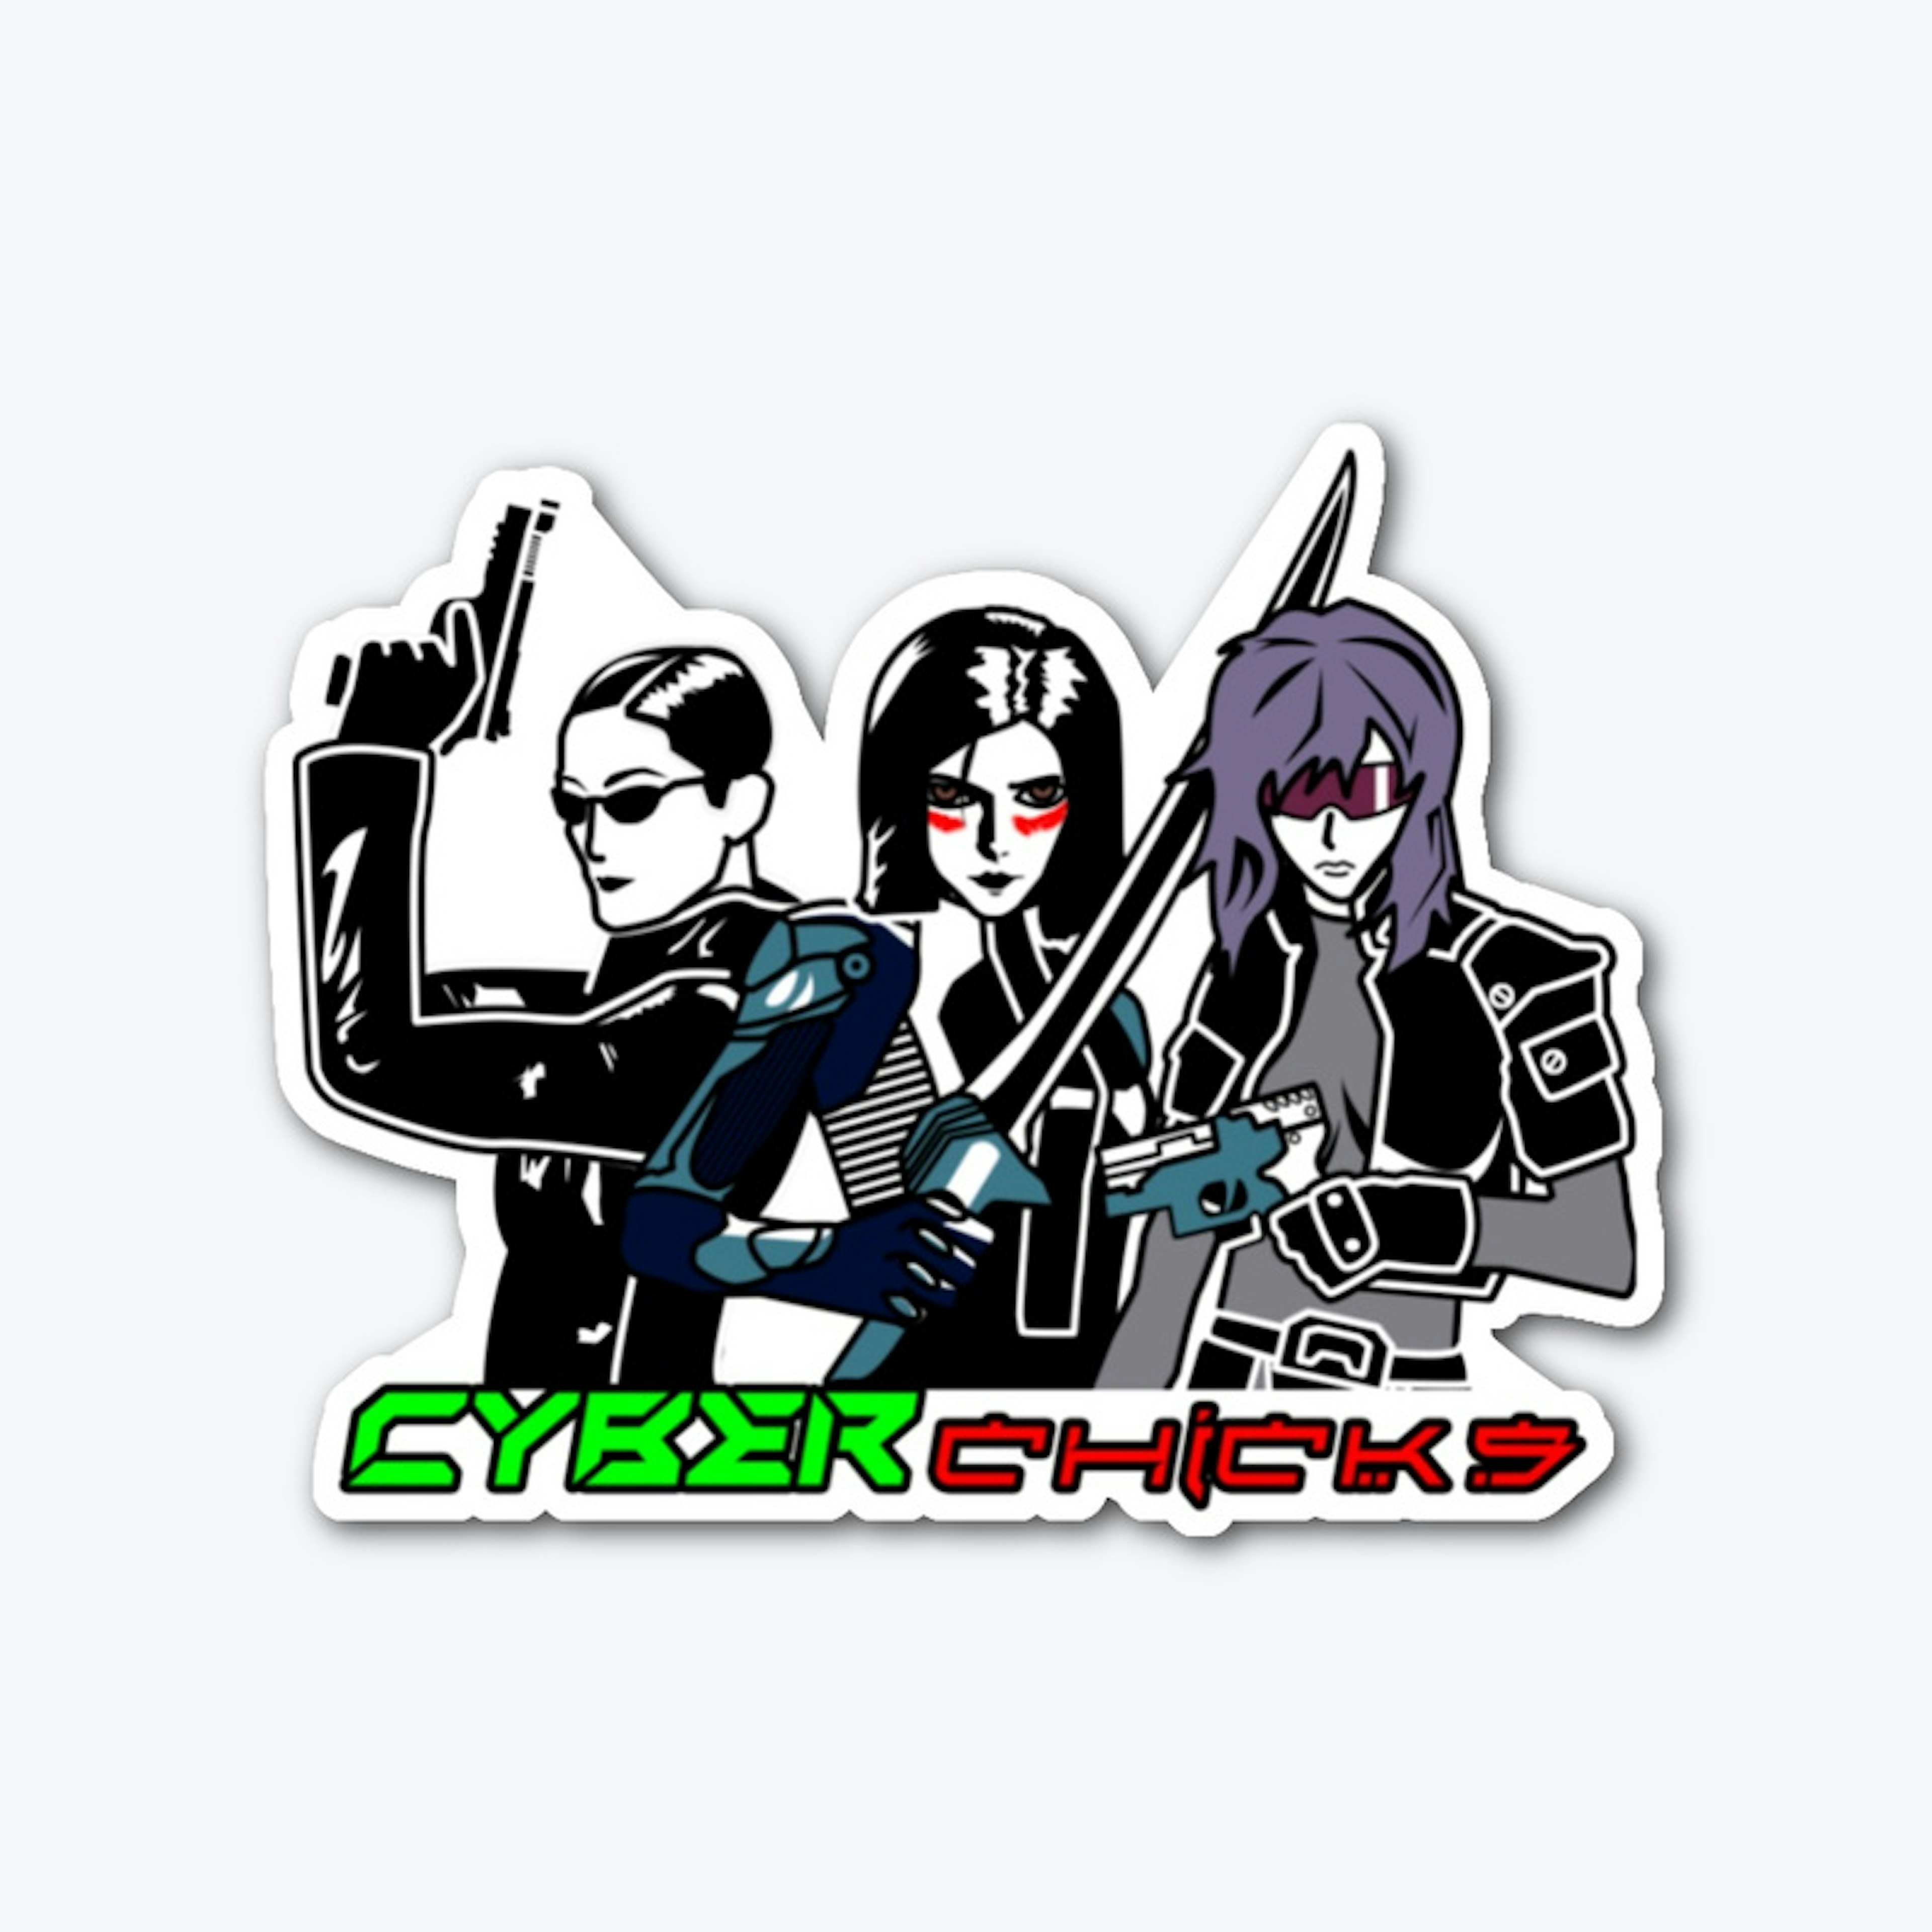 Cyberchicks